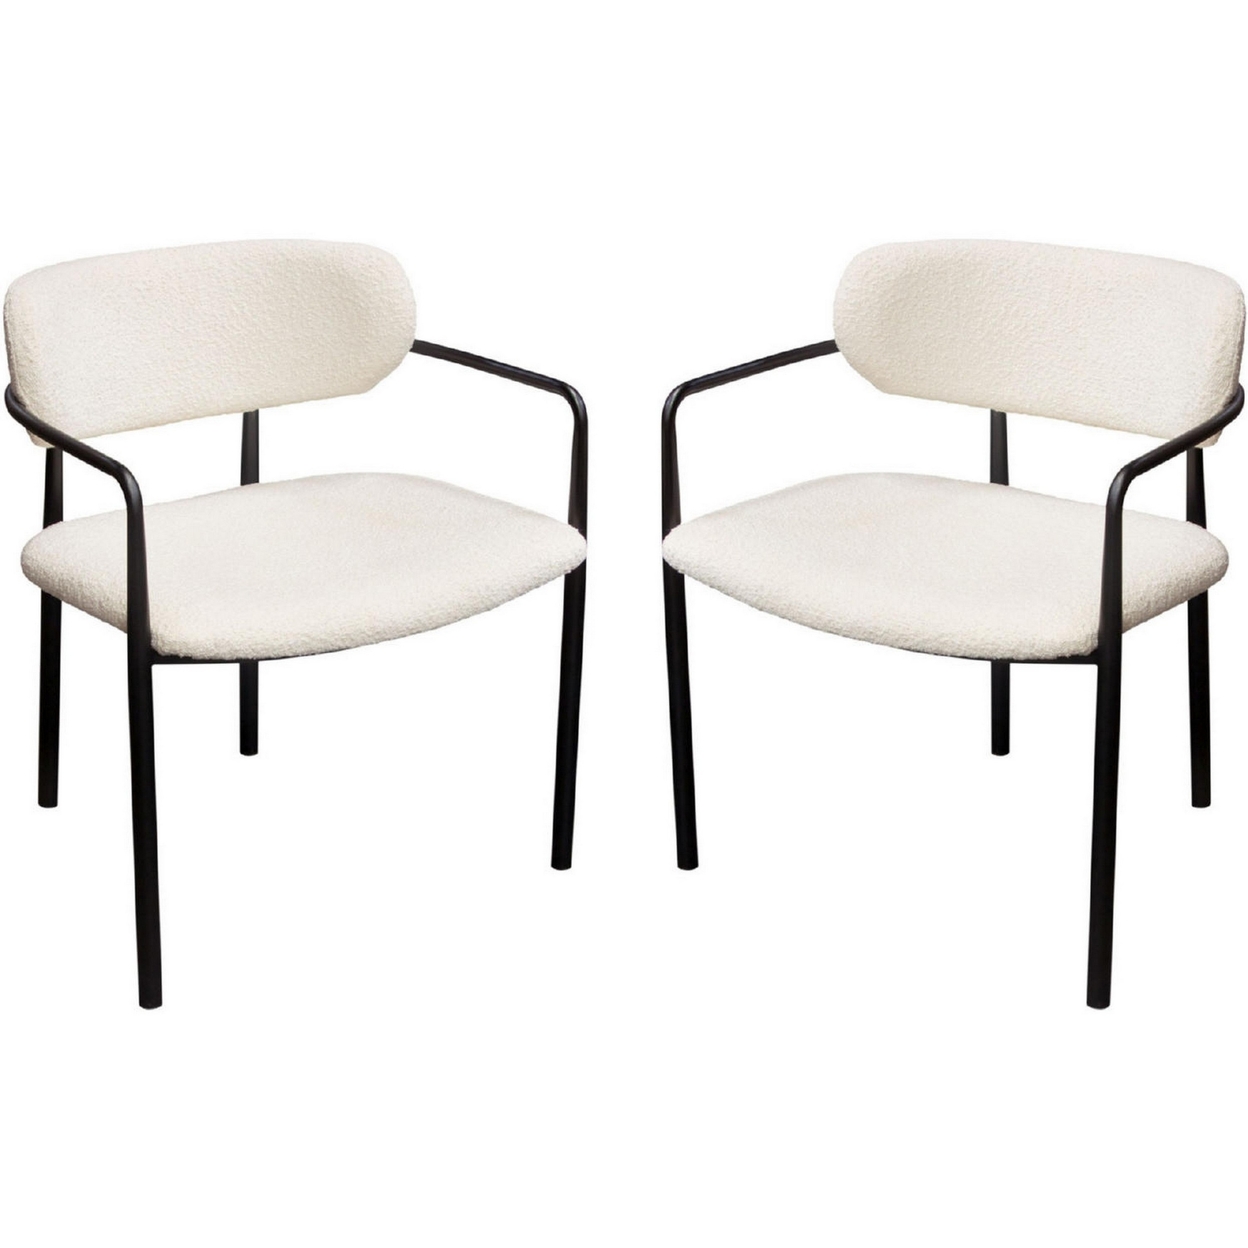 Oke 26 Inch Padded Dining Chair, Set Of 2, Black, Ivory Boucle Upholstery- Saltoro Sherpi